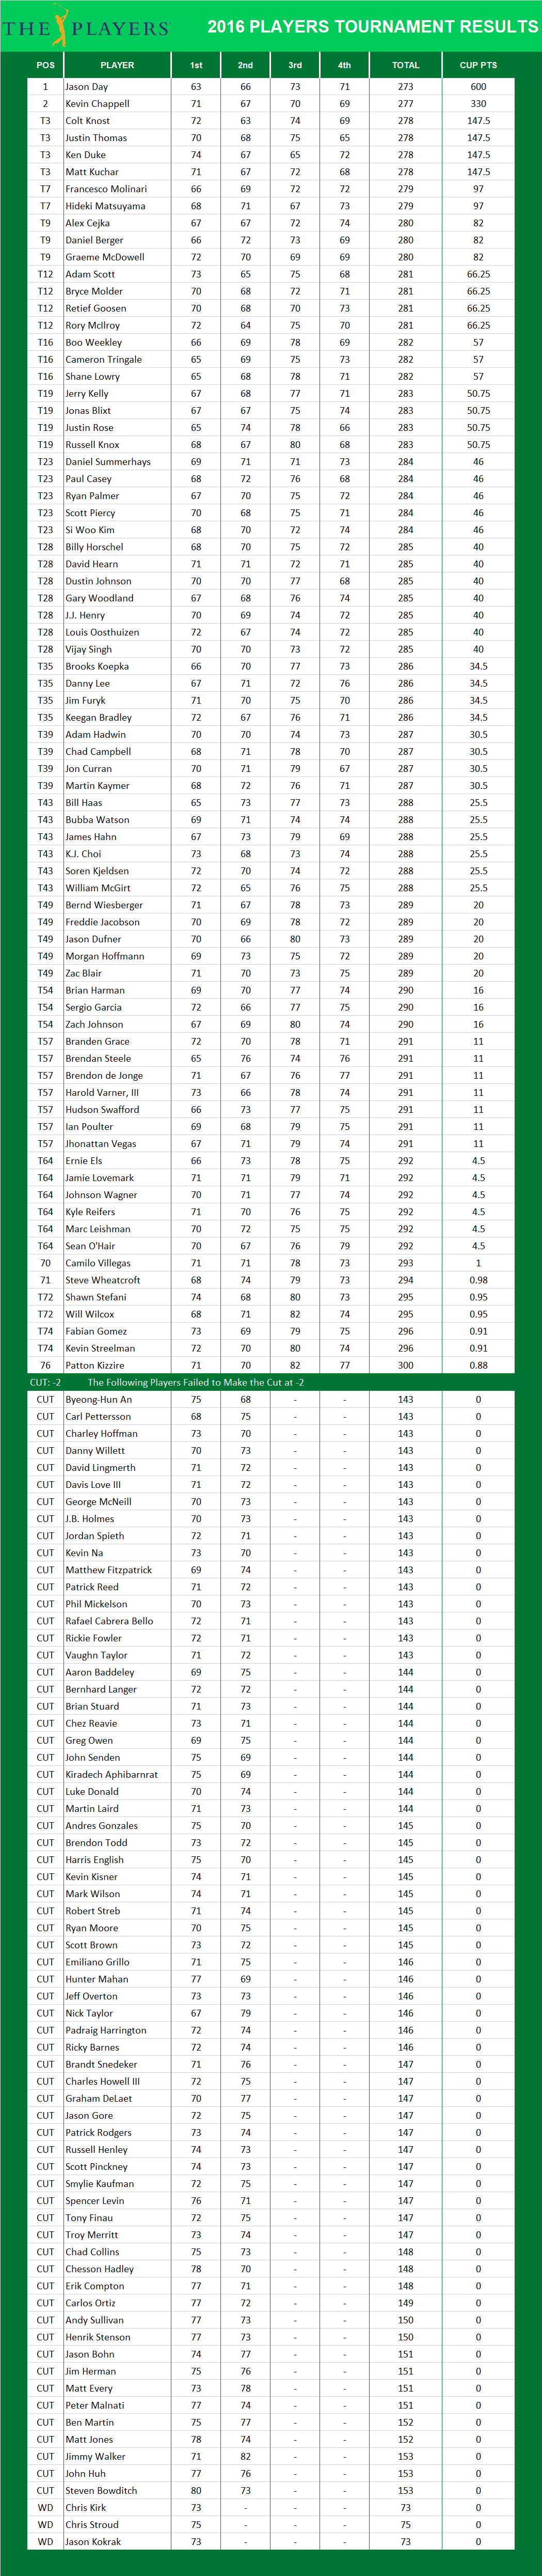 2016 Players Championship PGA Results